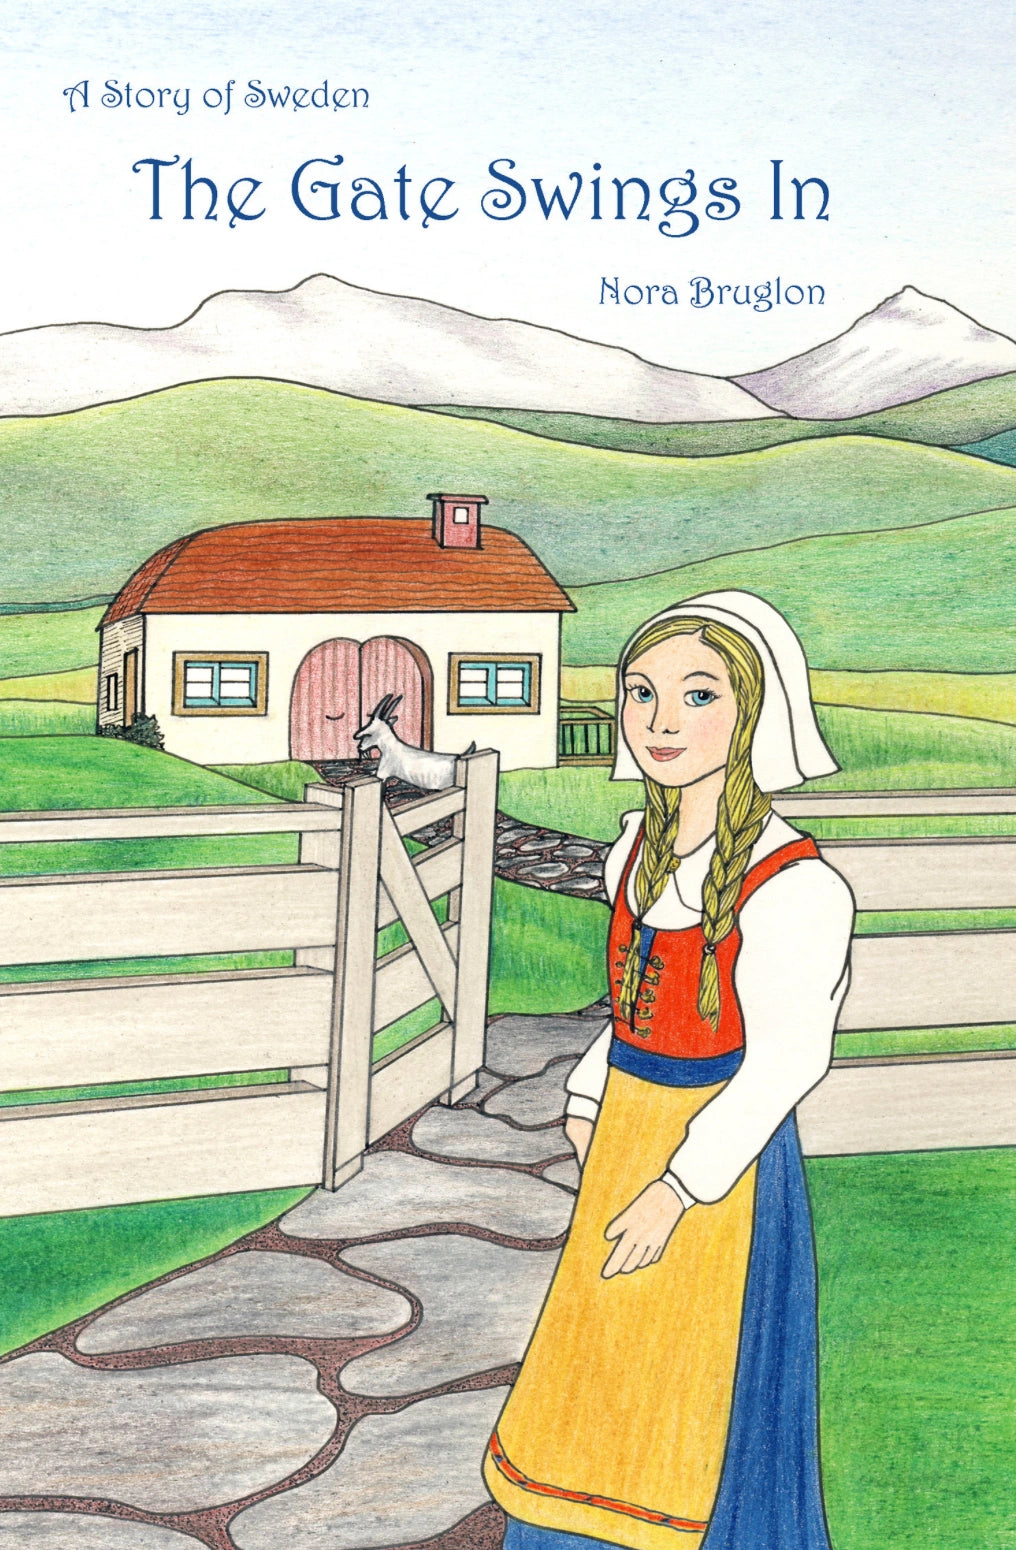 The Gate Swings In by Nora Burglon - Updated by Reg Down - Alder & Alouette